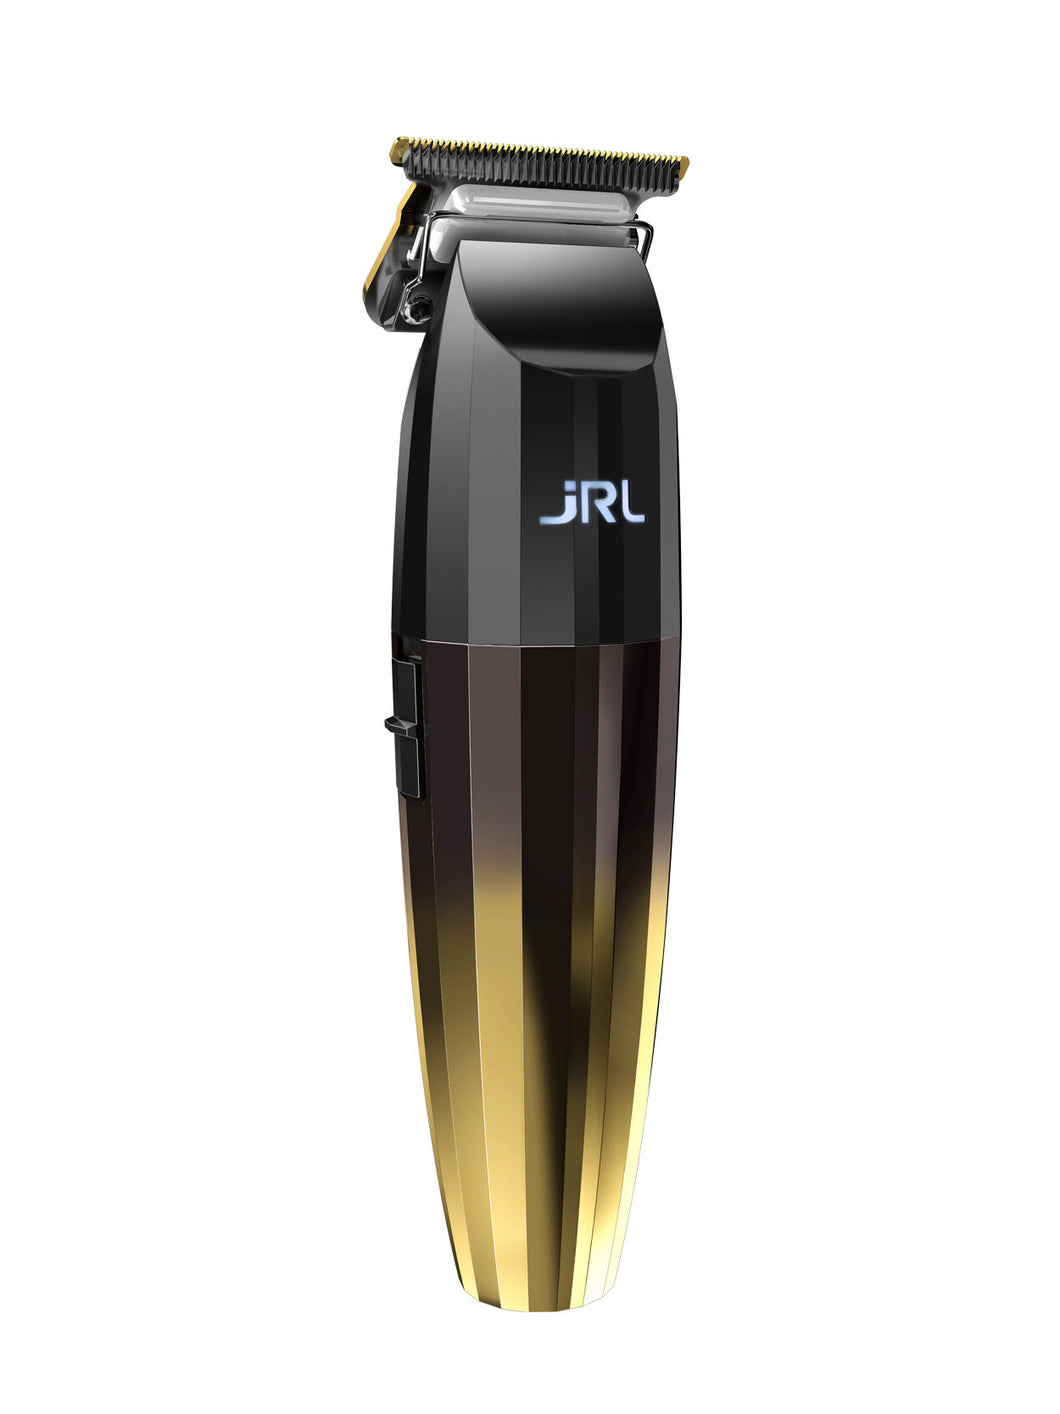 JRL Professional FreshFade 2020T Trimmer - Gold Edition